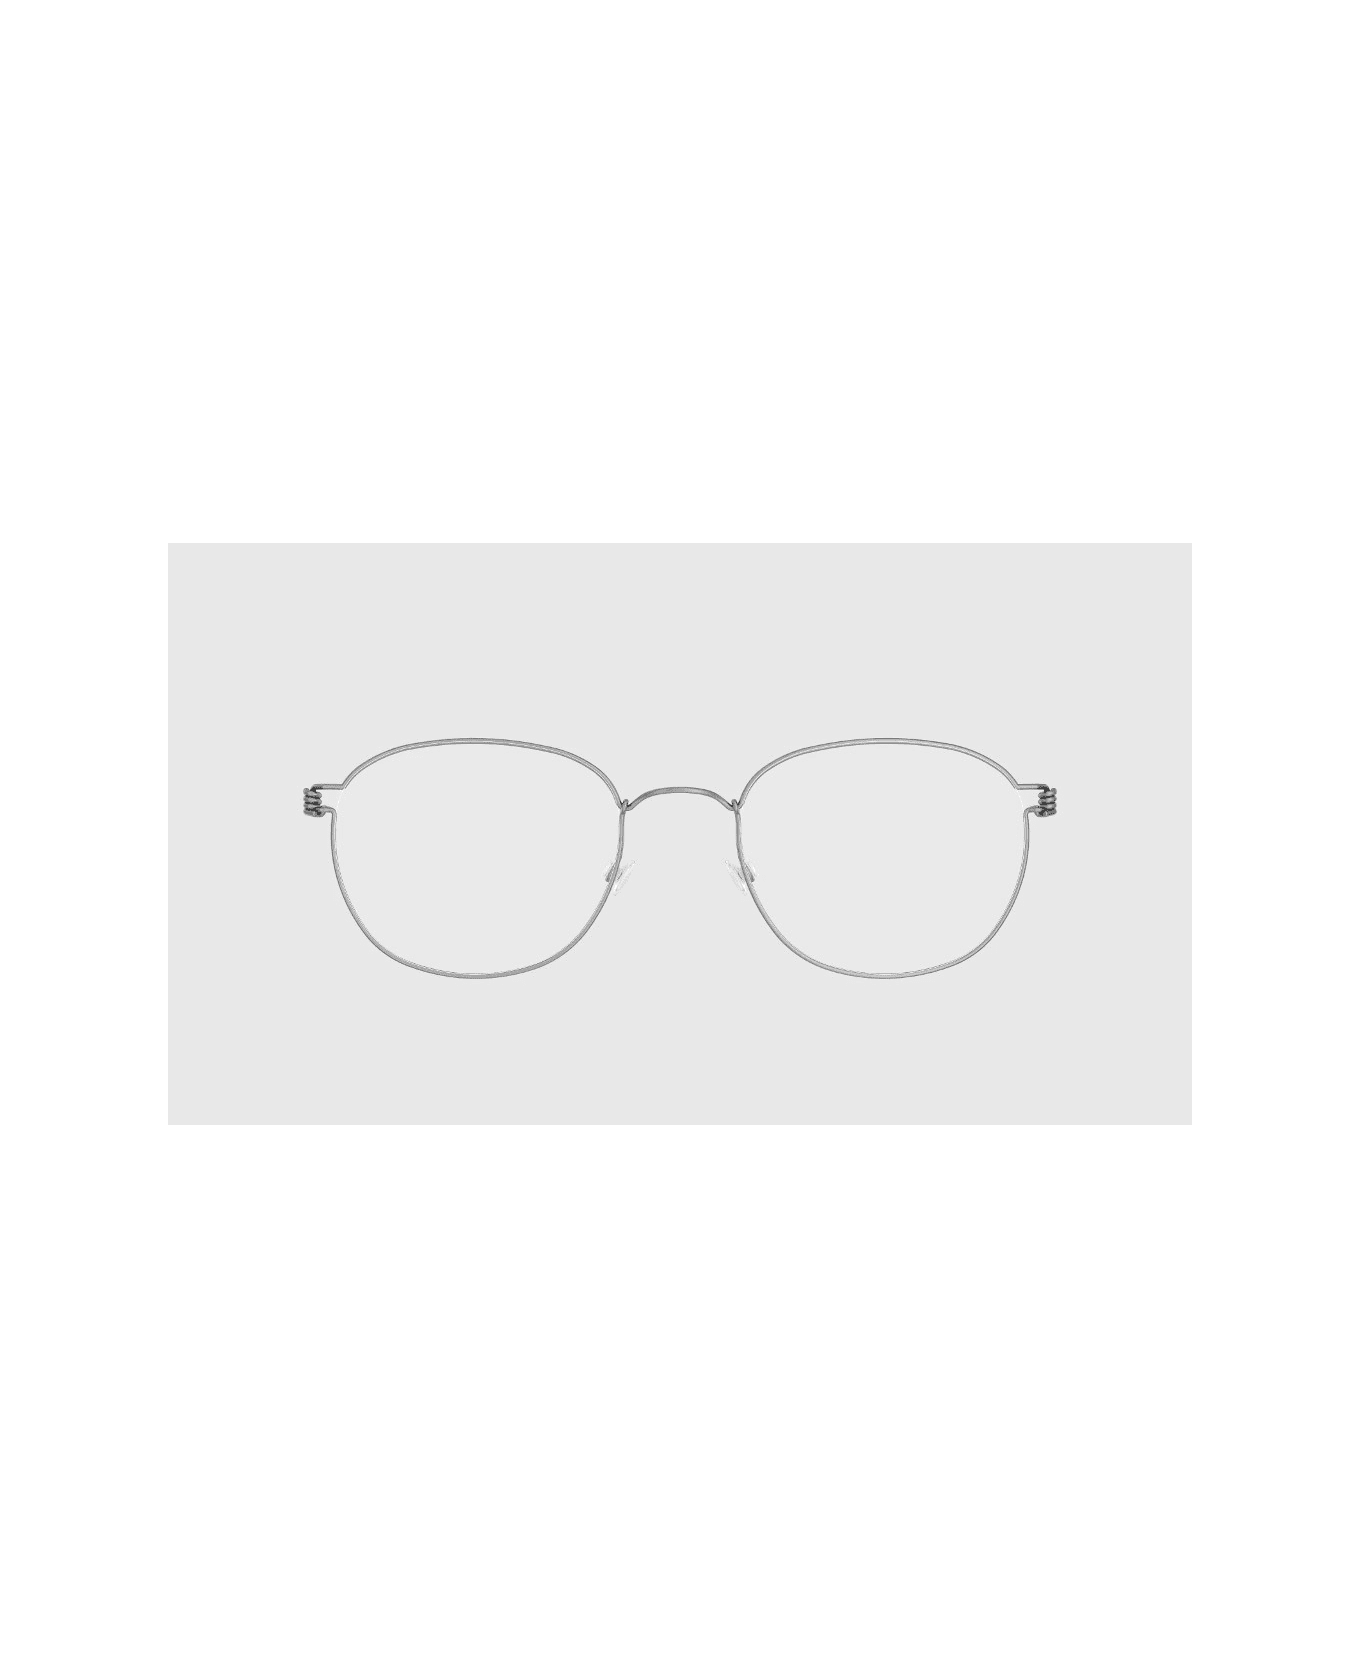 LINDBERG Robin 10 Glasses - Silver アイウェア